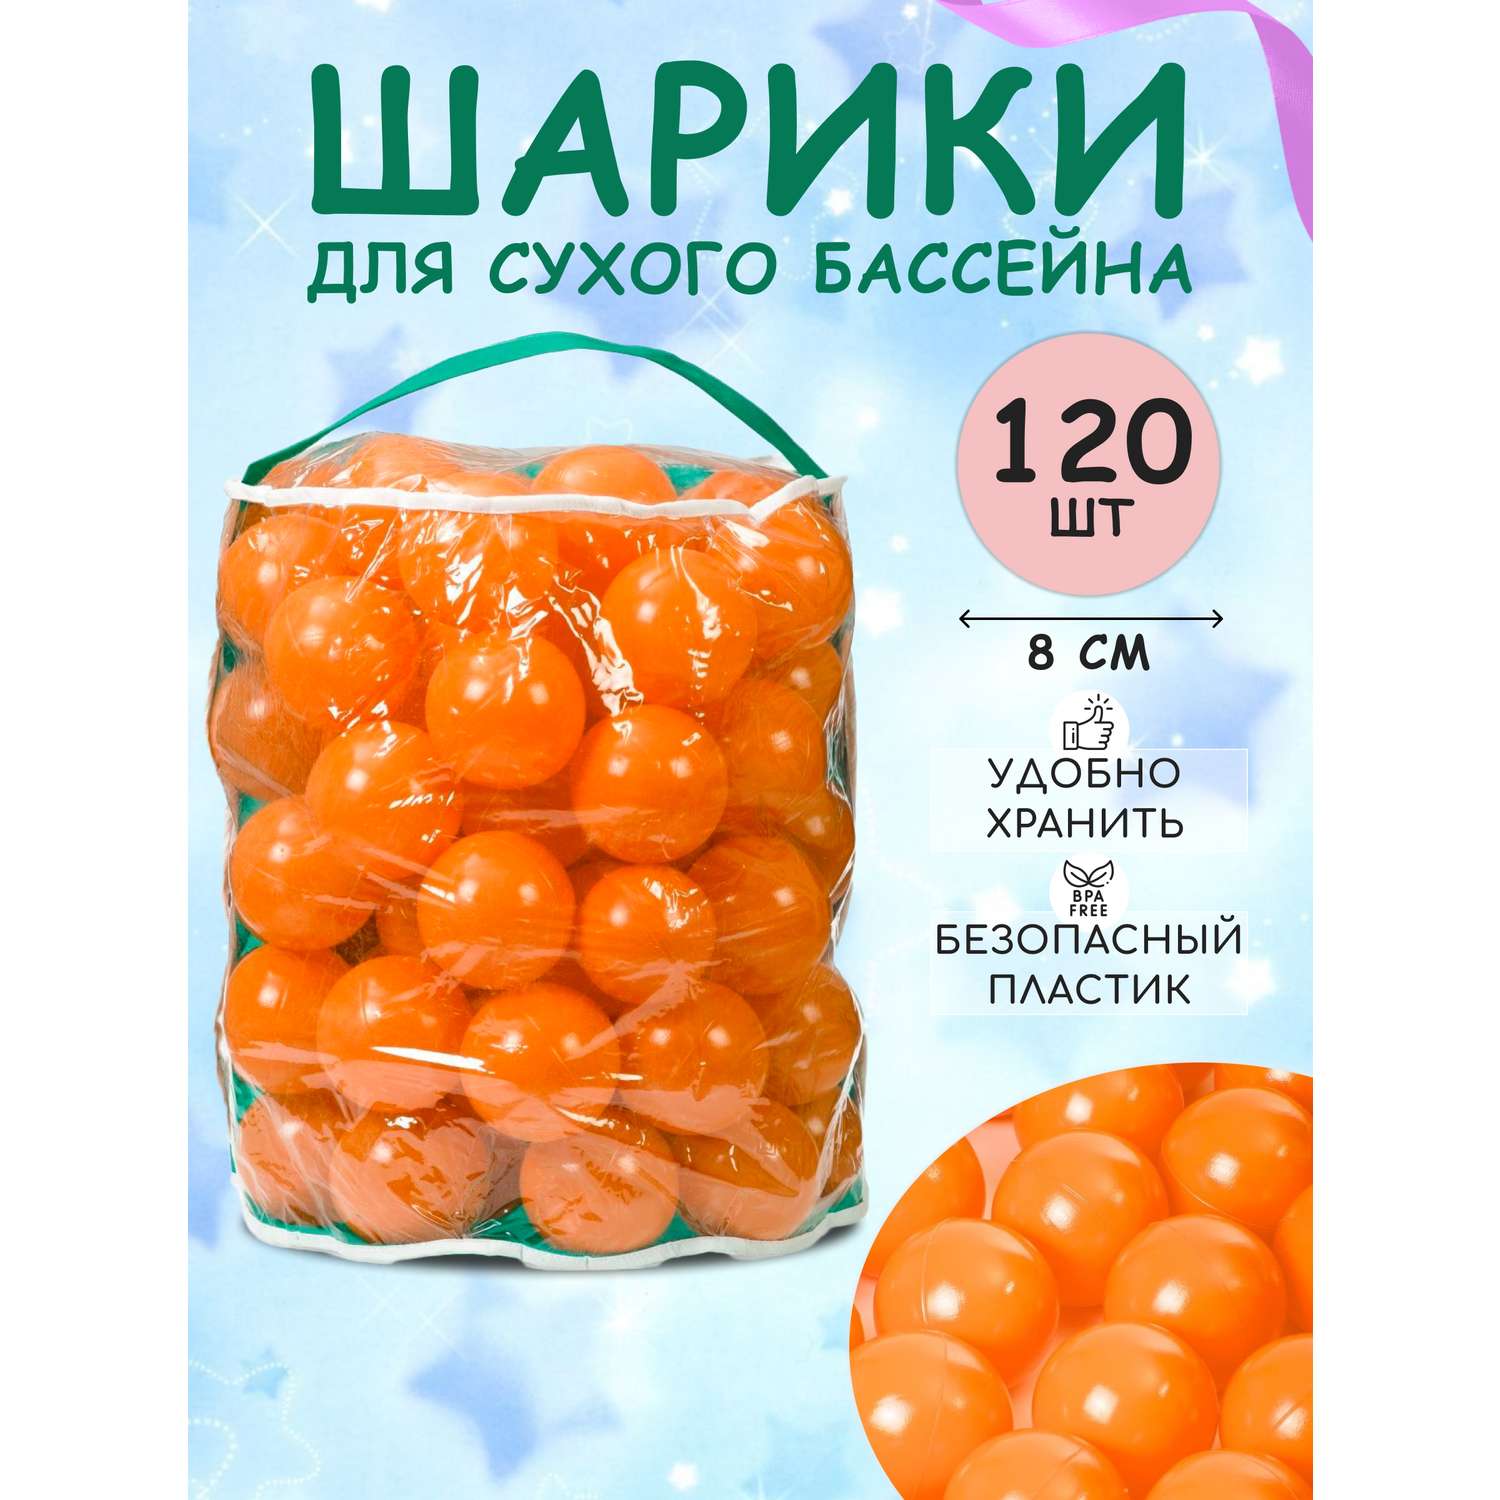 Шарики BABY STYLE Набор для сухого бассейна оранжевый 120 шт d 8 см - фото 1